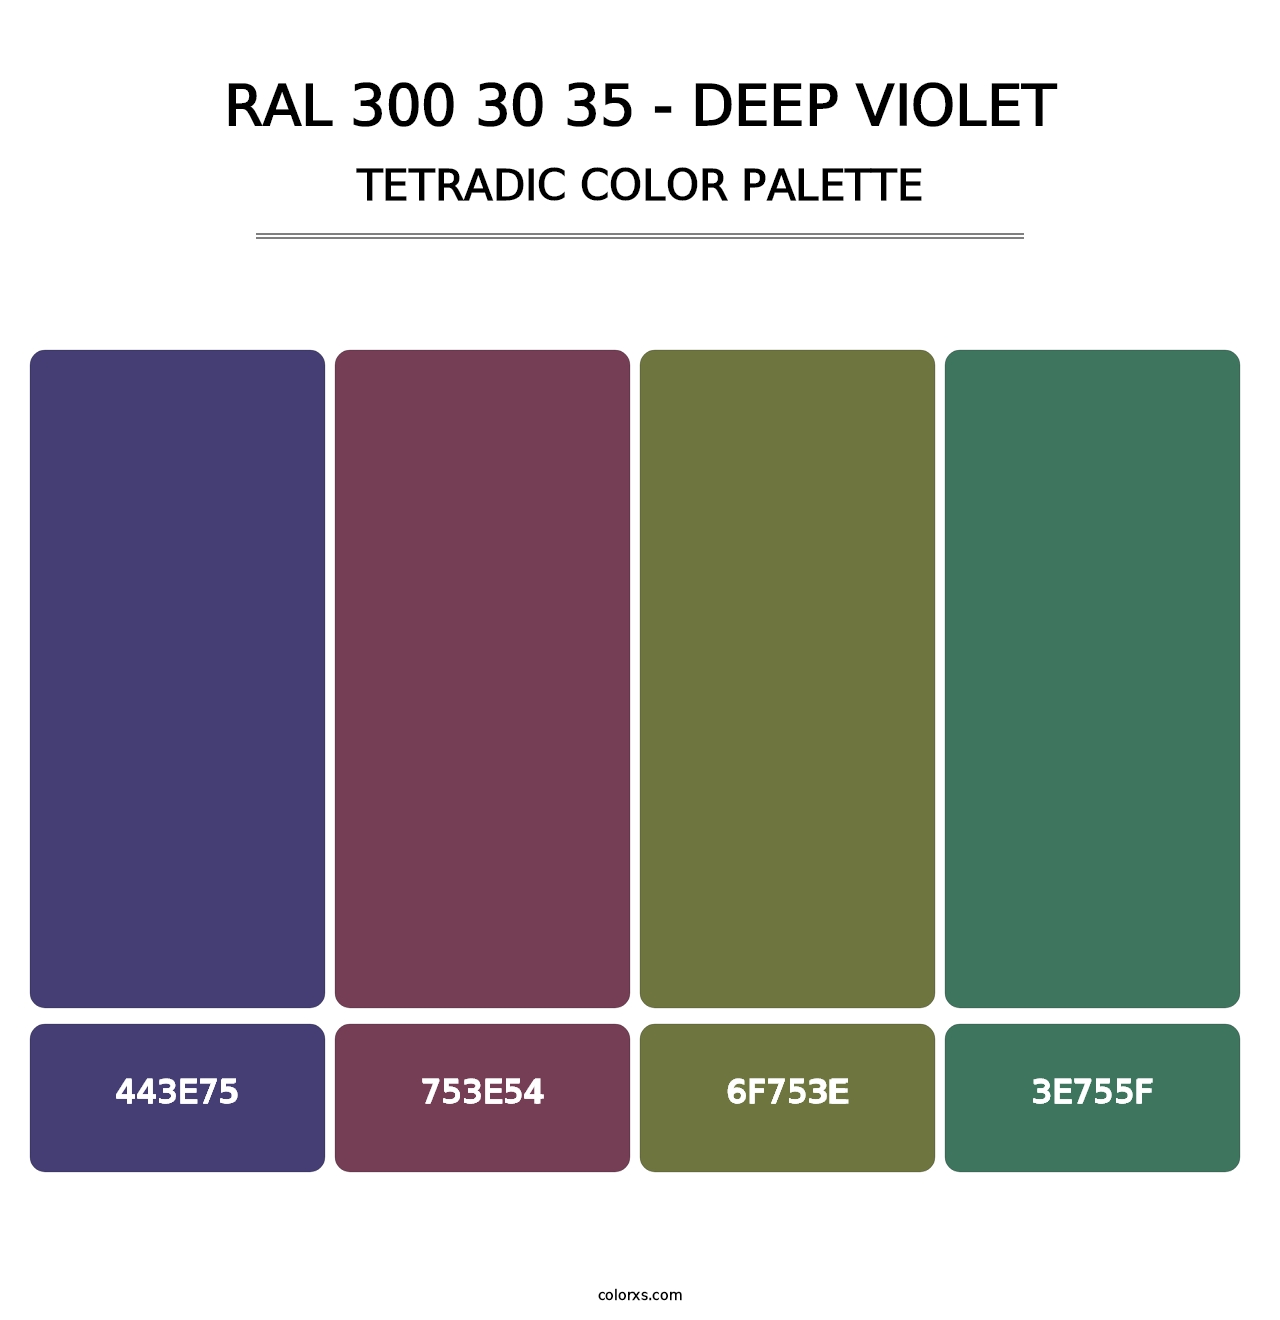 RAL 300 30 35 - Deep Violet - Tetradic Color Palette